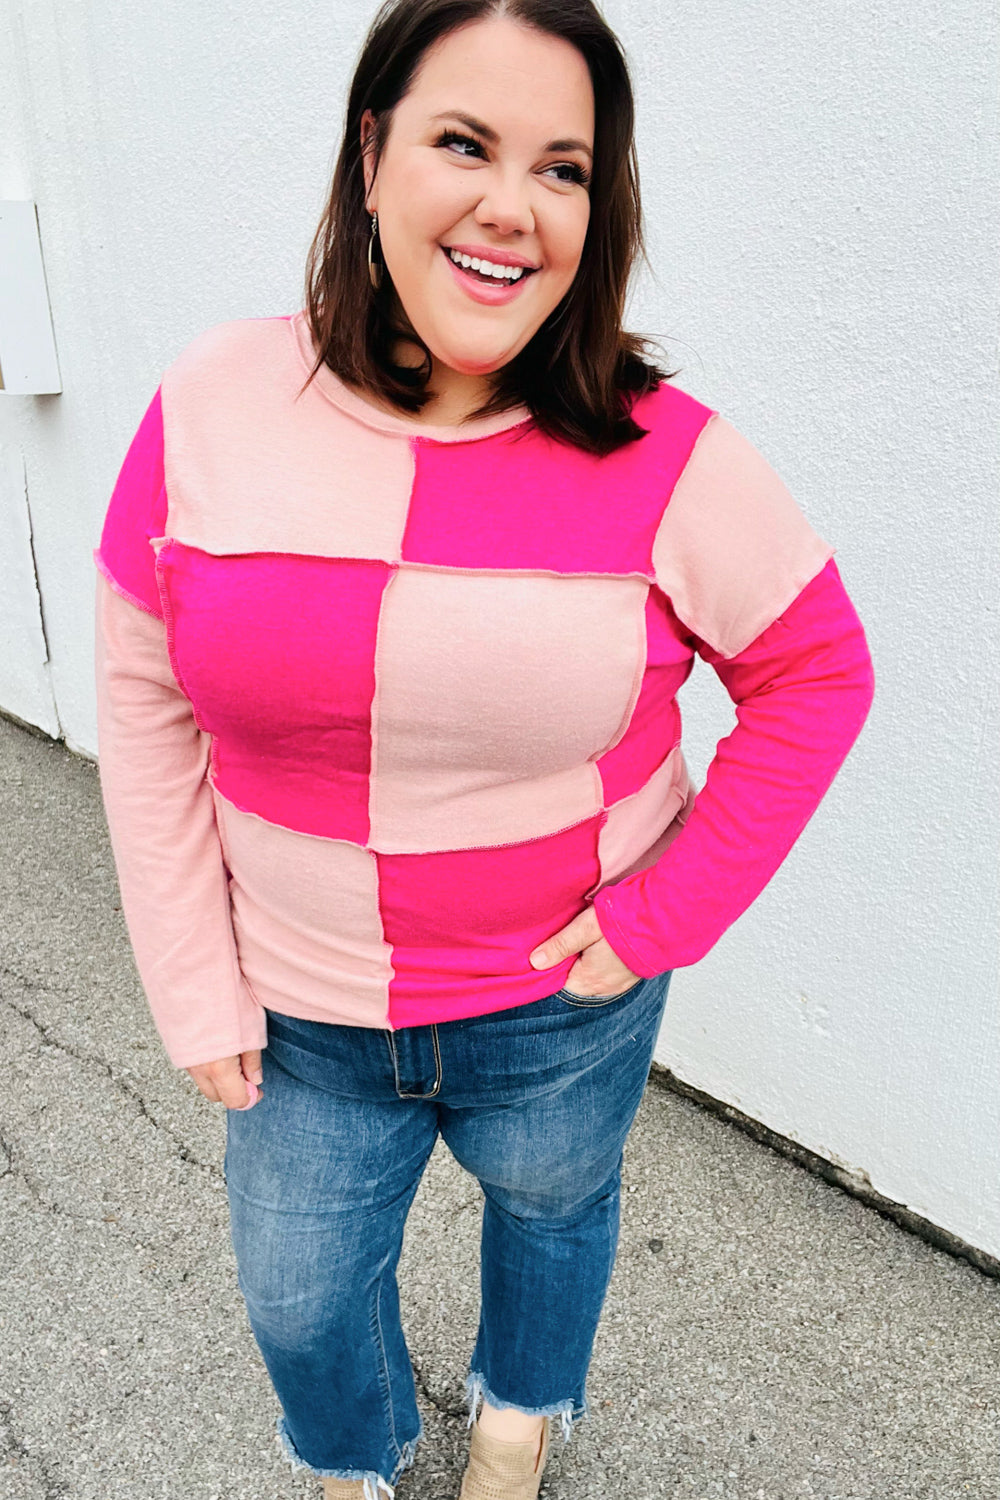 Pink/Blush Checkerboard Outseam Colorblock Sweater Top Haptics